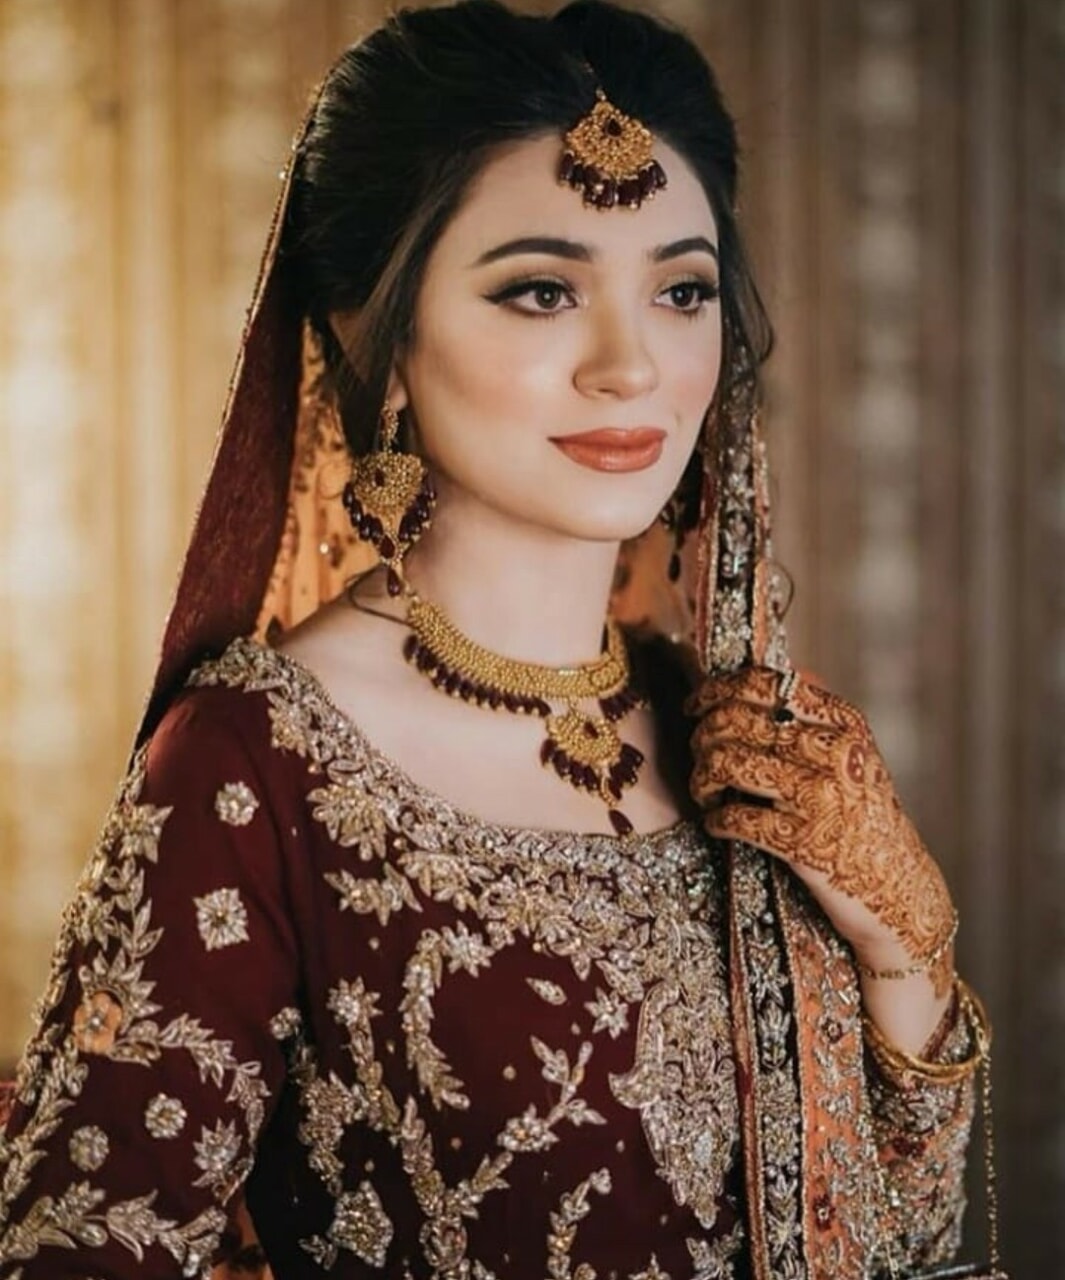 Pakistani Bride Wallpapers - Wallpaper Cave